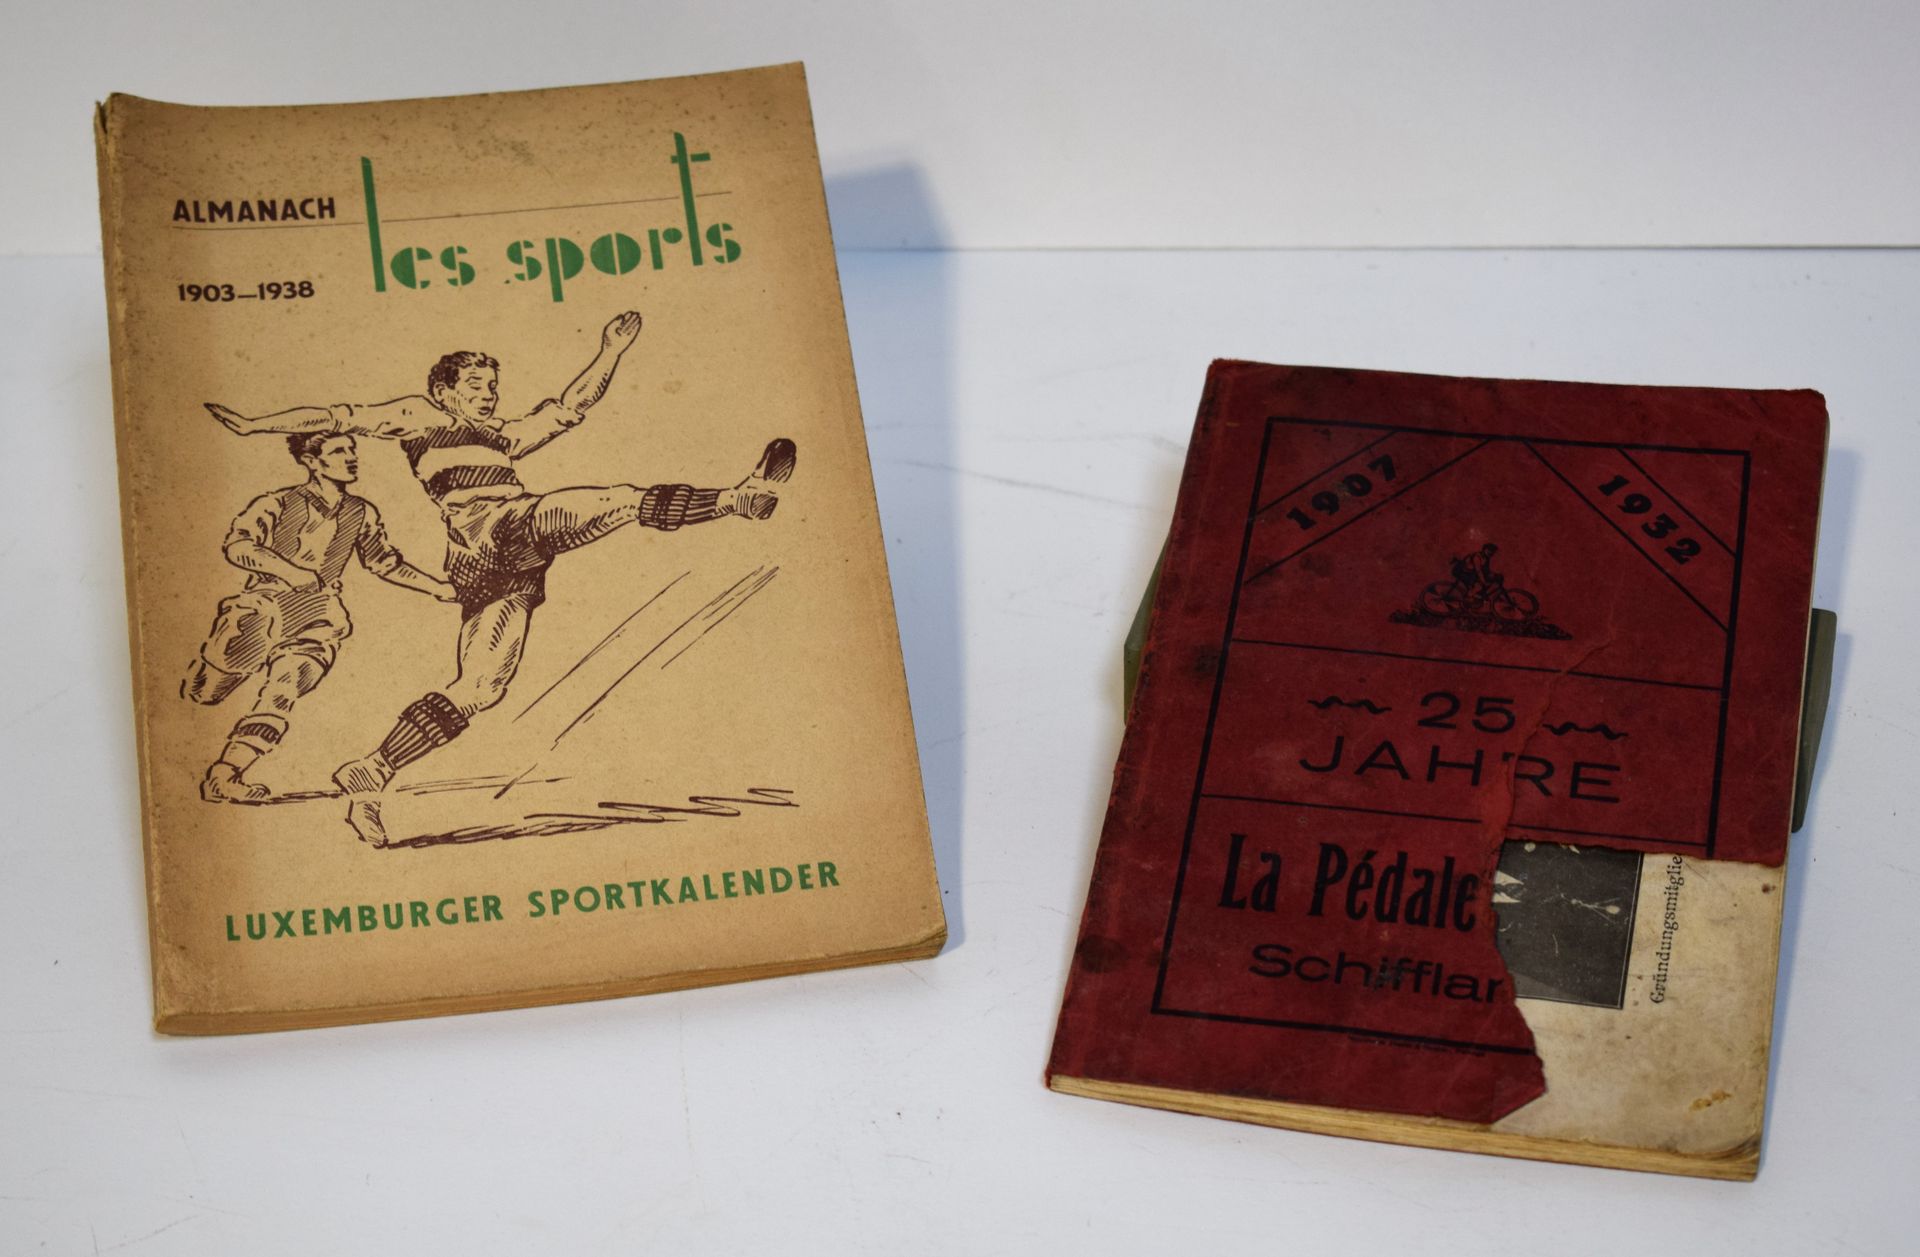 Null (Sport) 1. V. C. "La Pédale 1907" Schifflange: Programm des 25jährigen Stif&hellip;